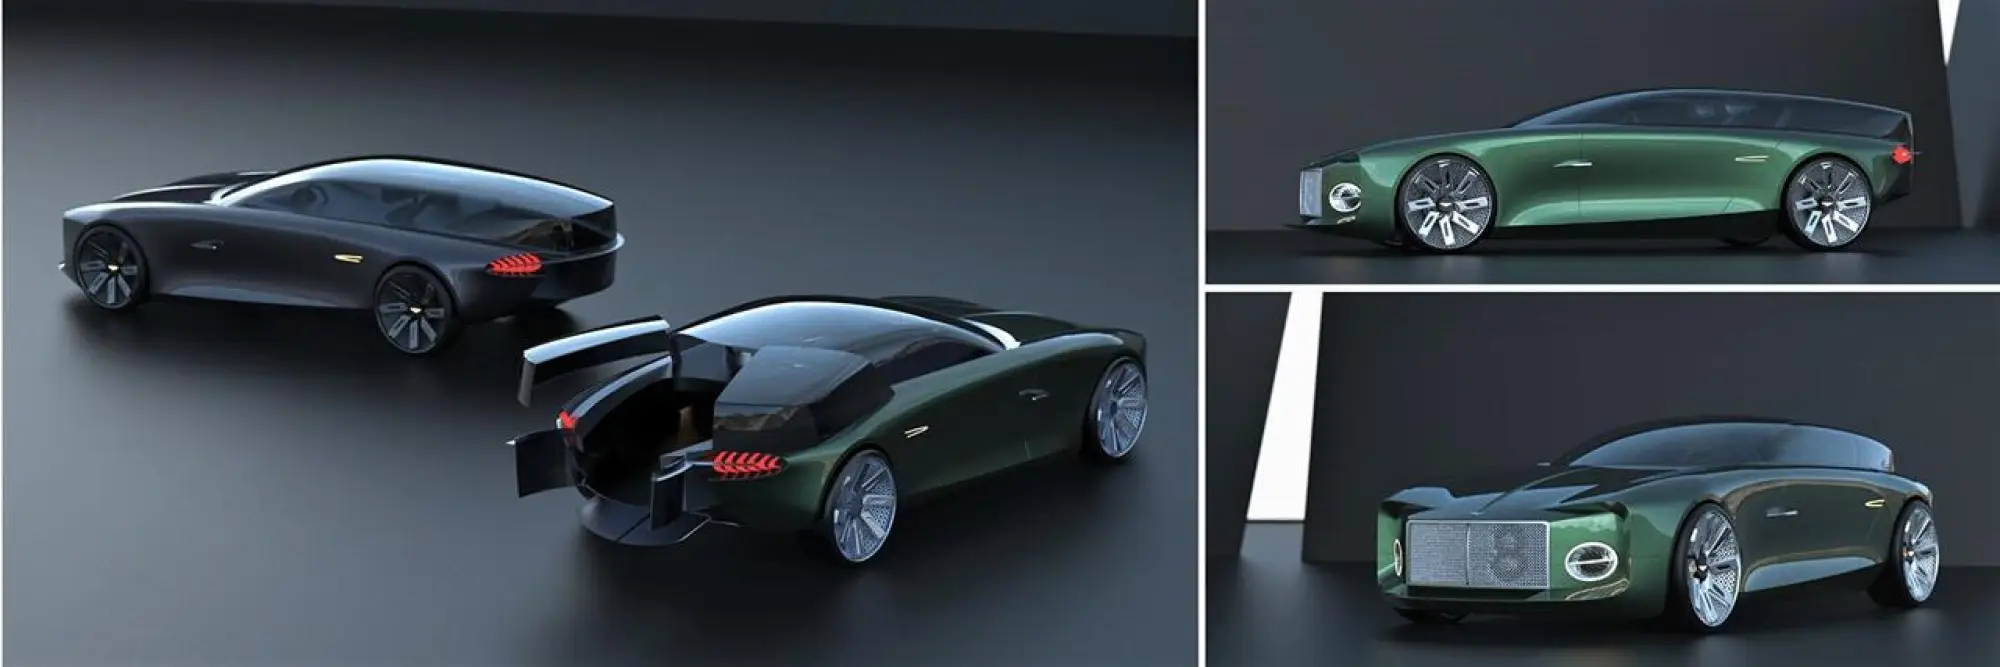 Bentley Centanne Concept - 9